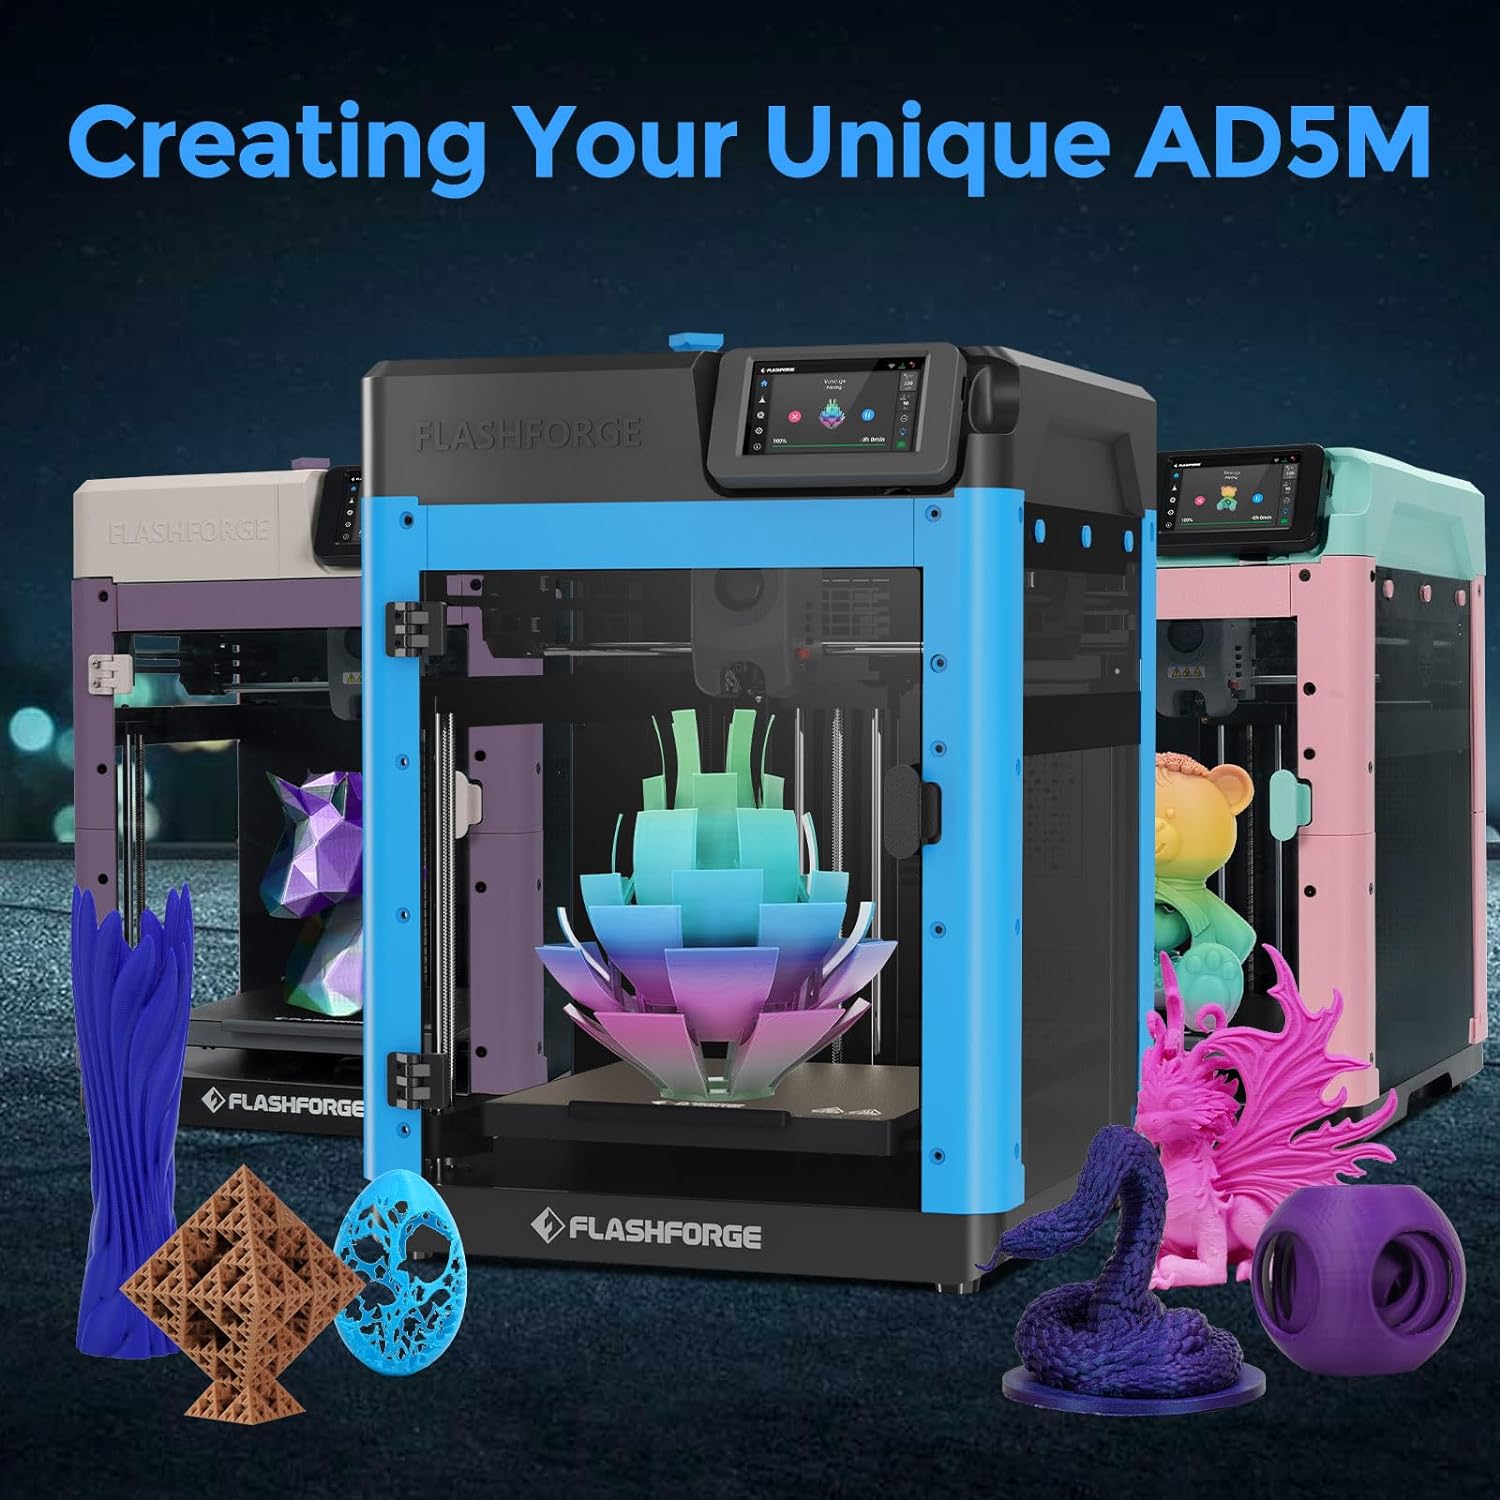 flashforge-adventurer-5m-3d-printer600mms-max-high-speed-fdm-3d-printers-with-fully-auto-leveling-280c-direct-extruder-w-4 Fully Auto Leveling 3D Printer Review